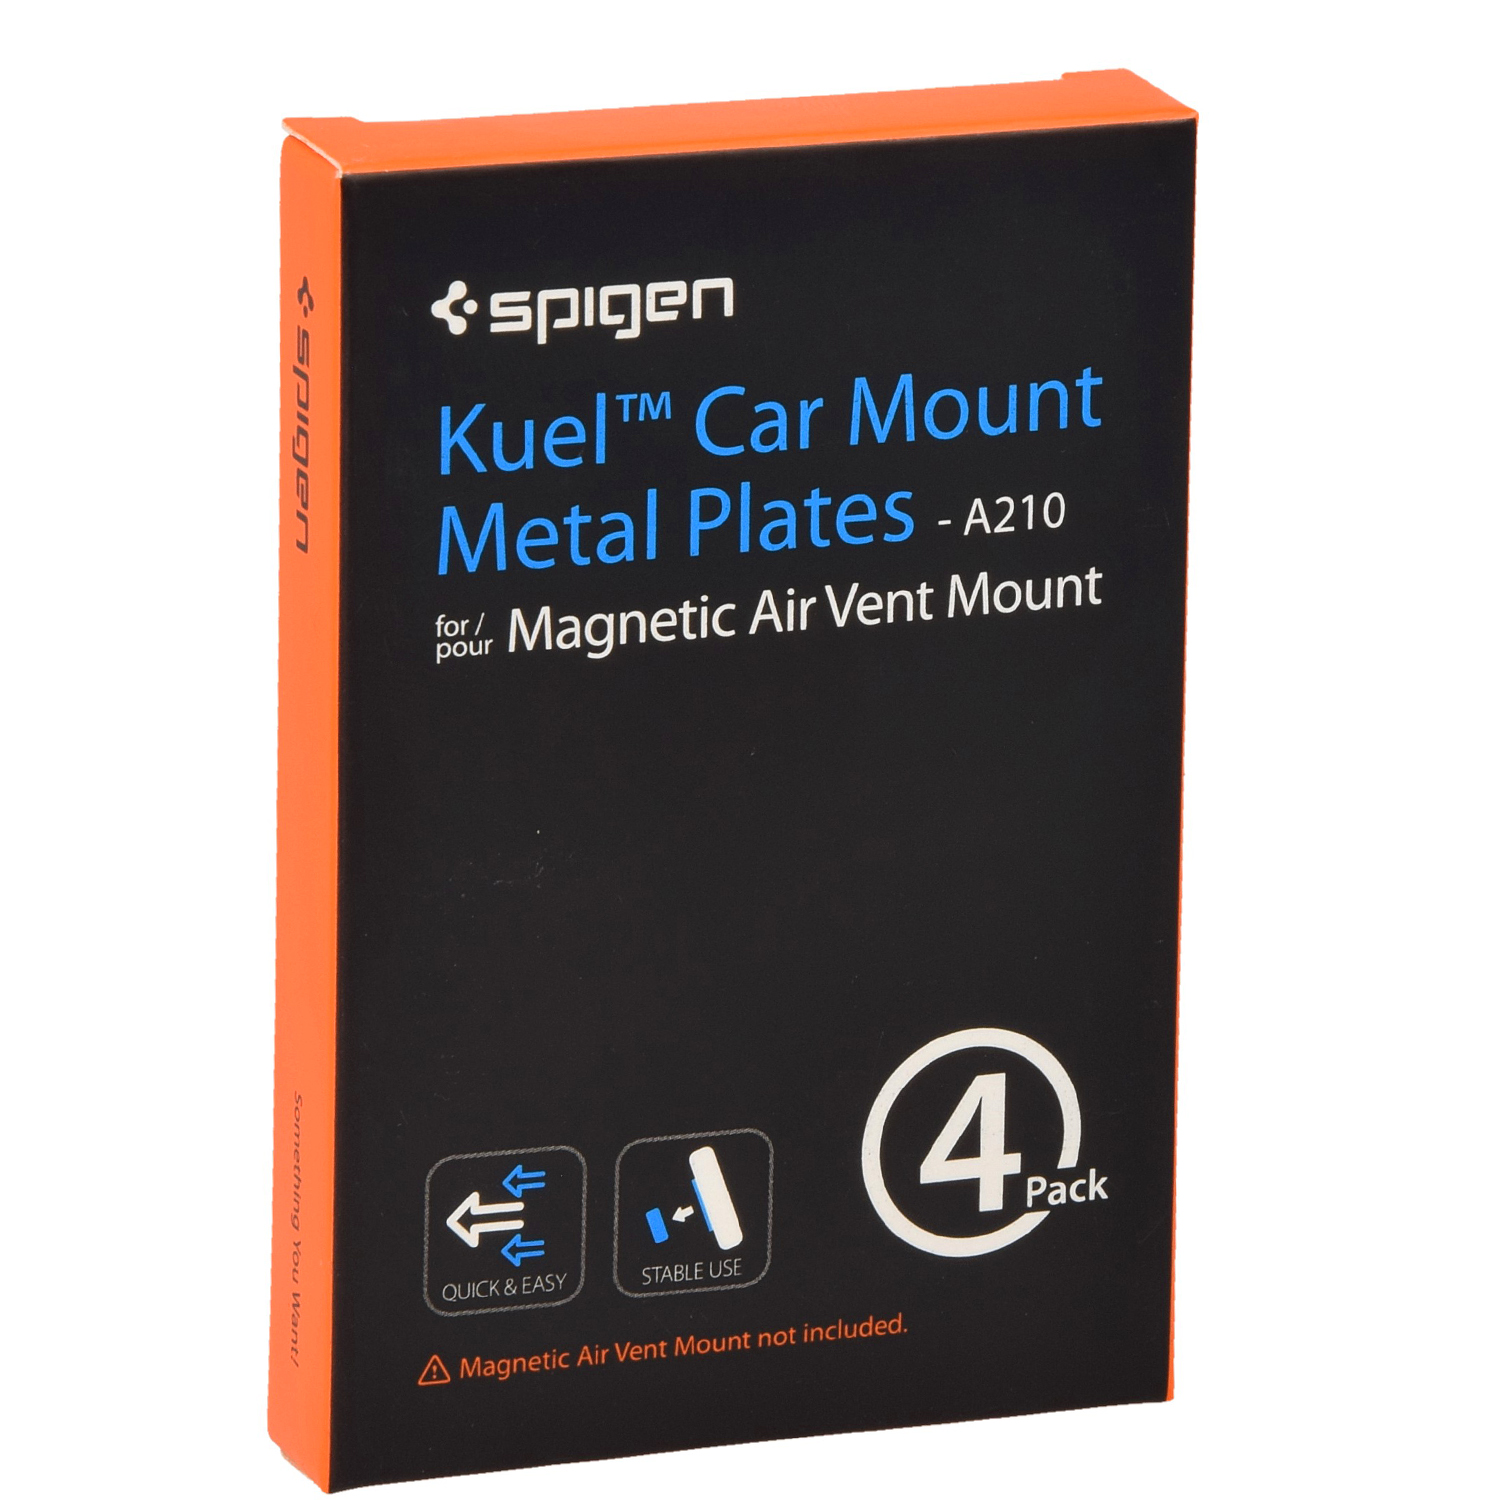 Spigen Kuel Car Mount Metal Plates